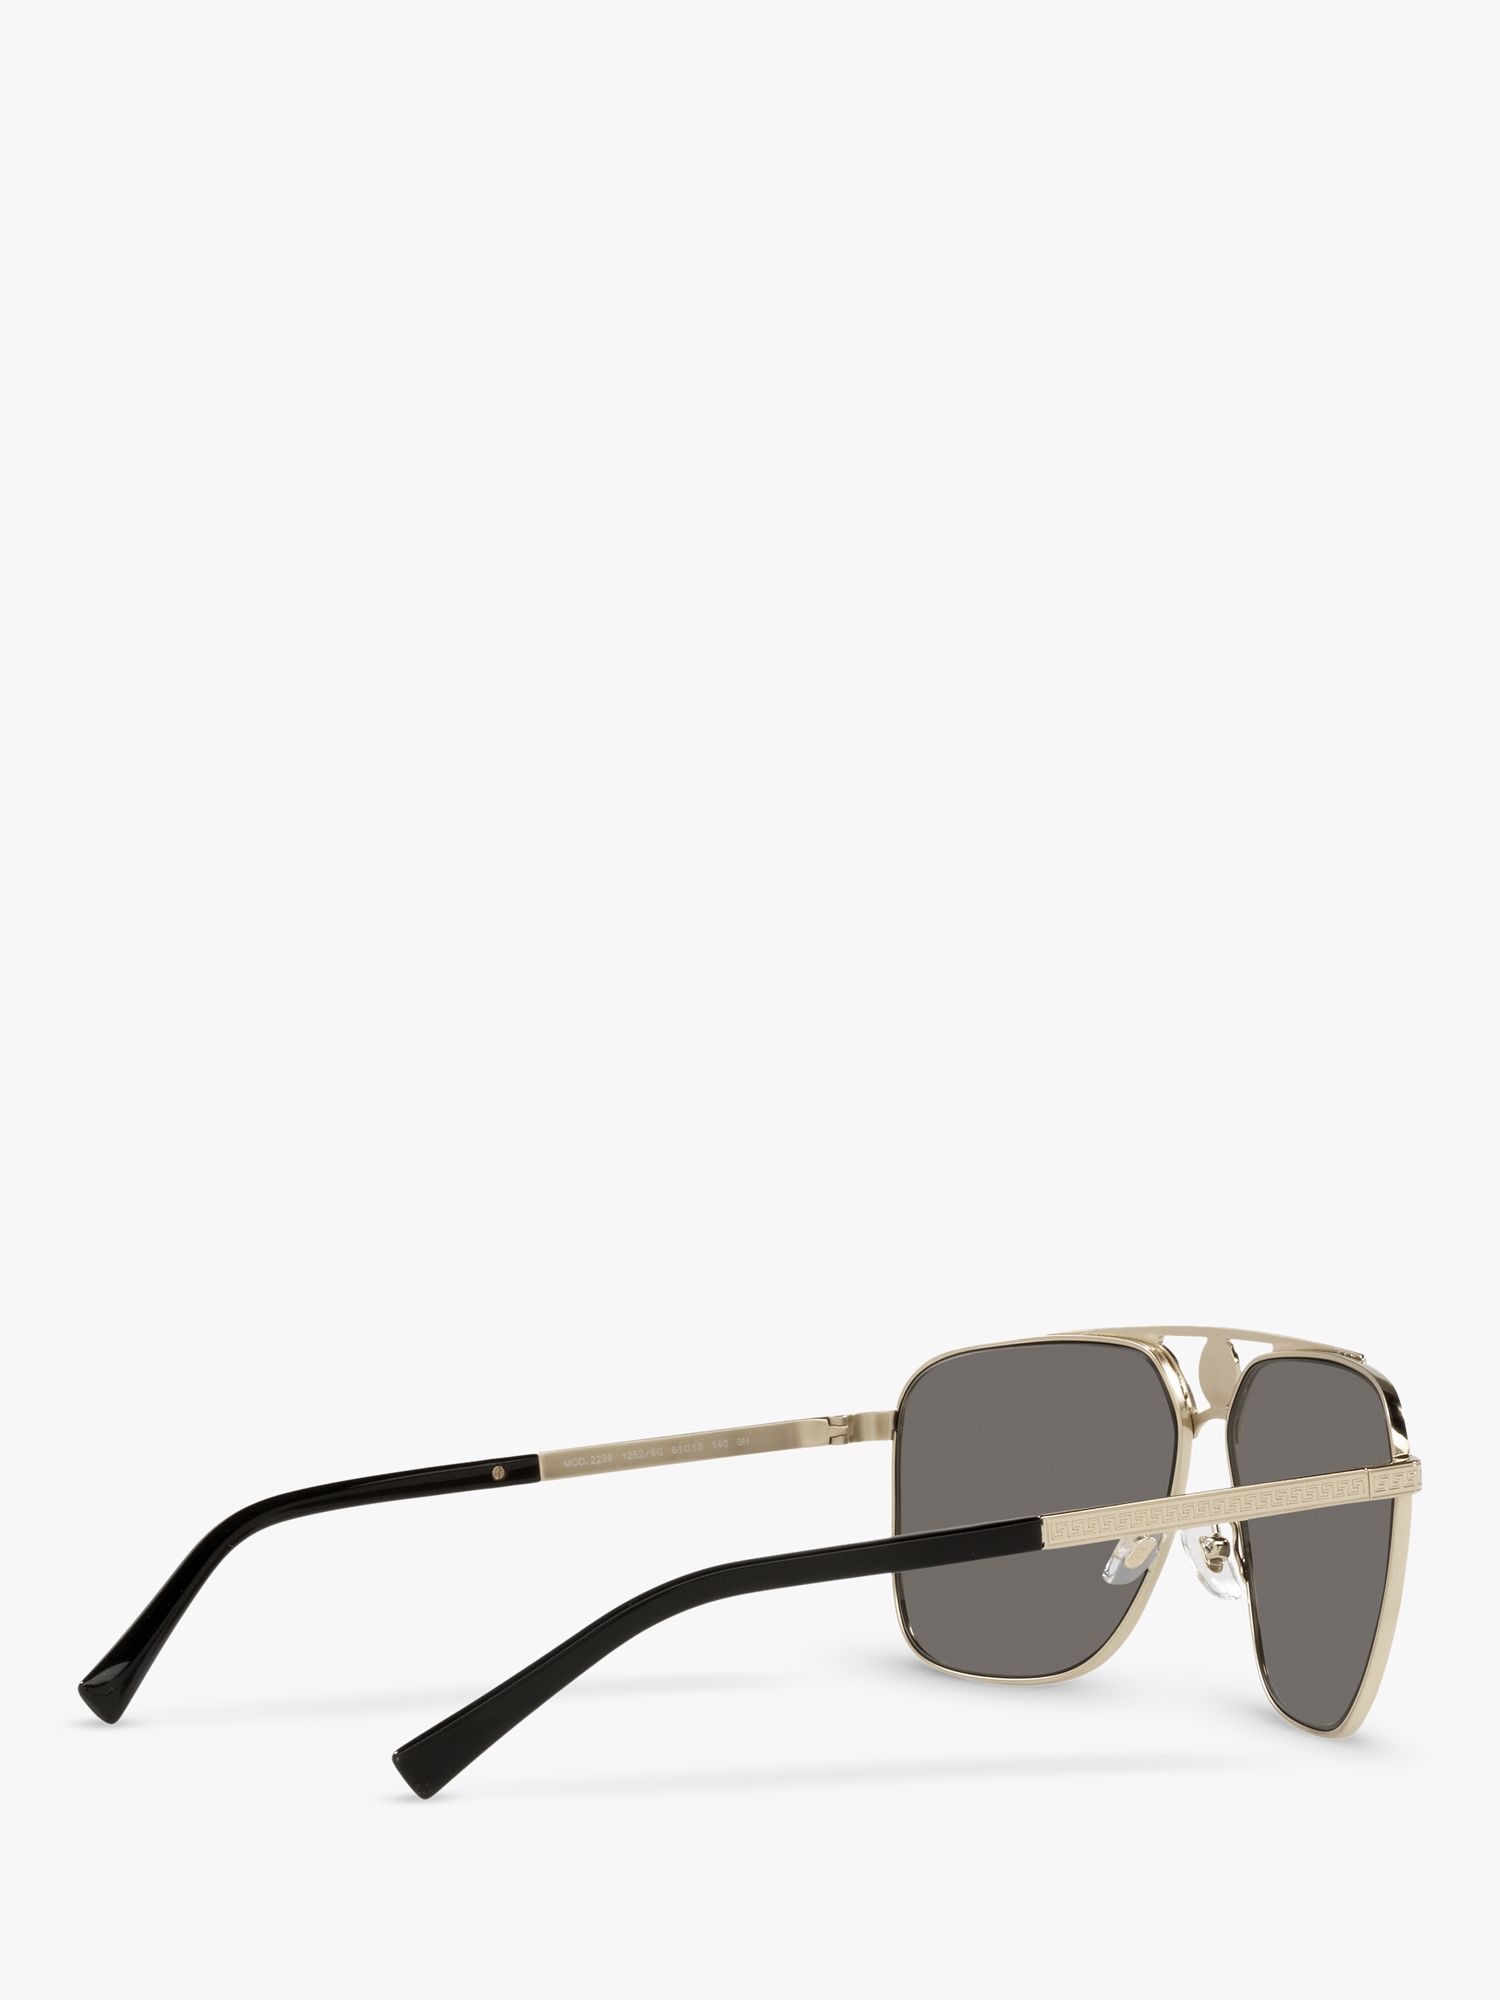 Versace VE2238 Men's Rectangular Sunglasses, Pale Gold/Mirror Grey at ...